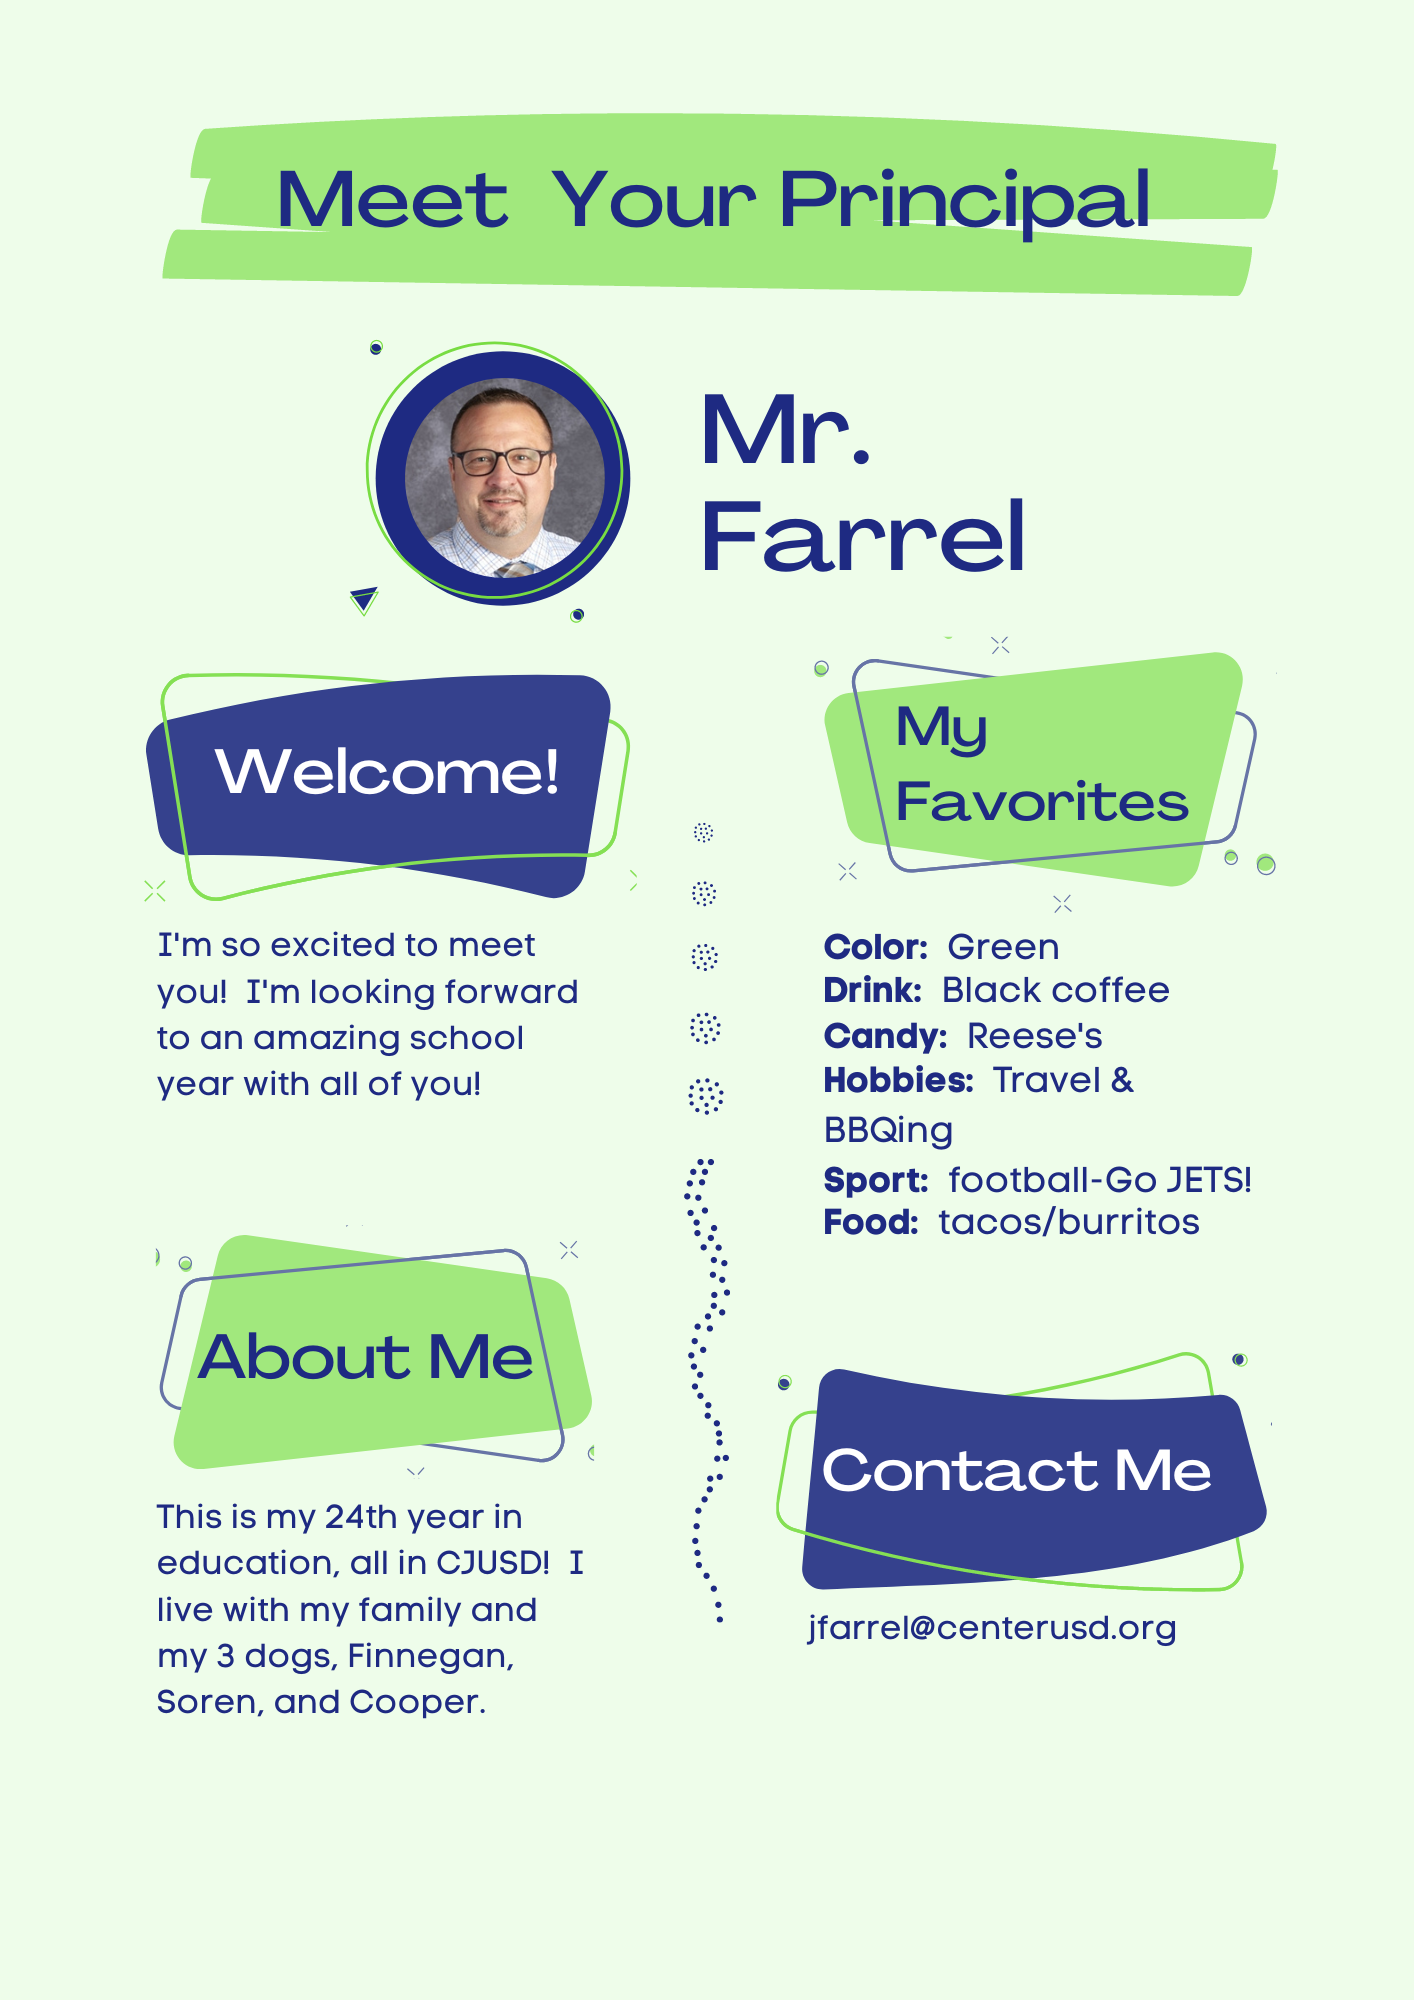 Meet Your Principal-Information about Mr. Farrel